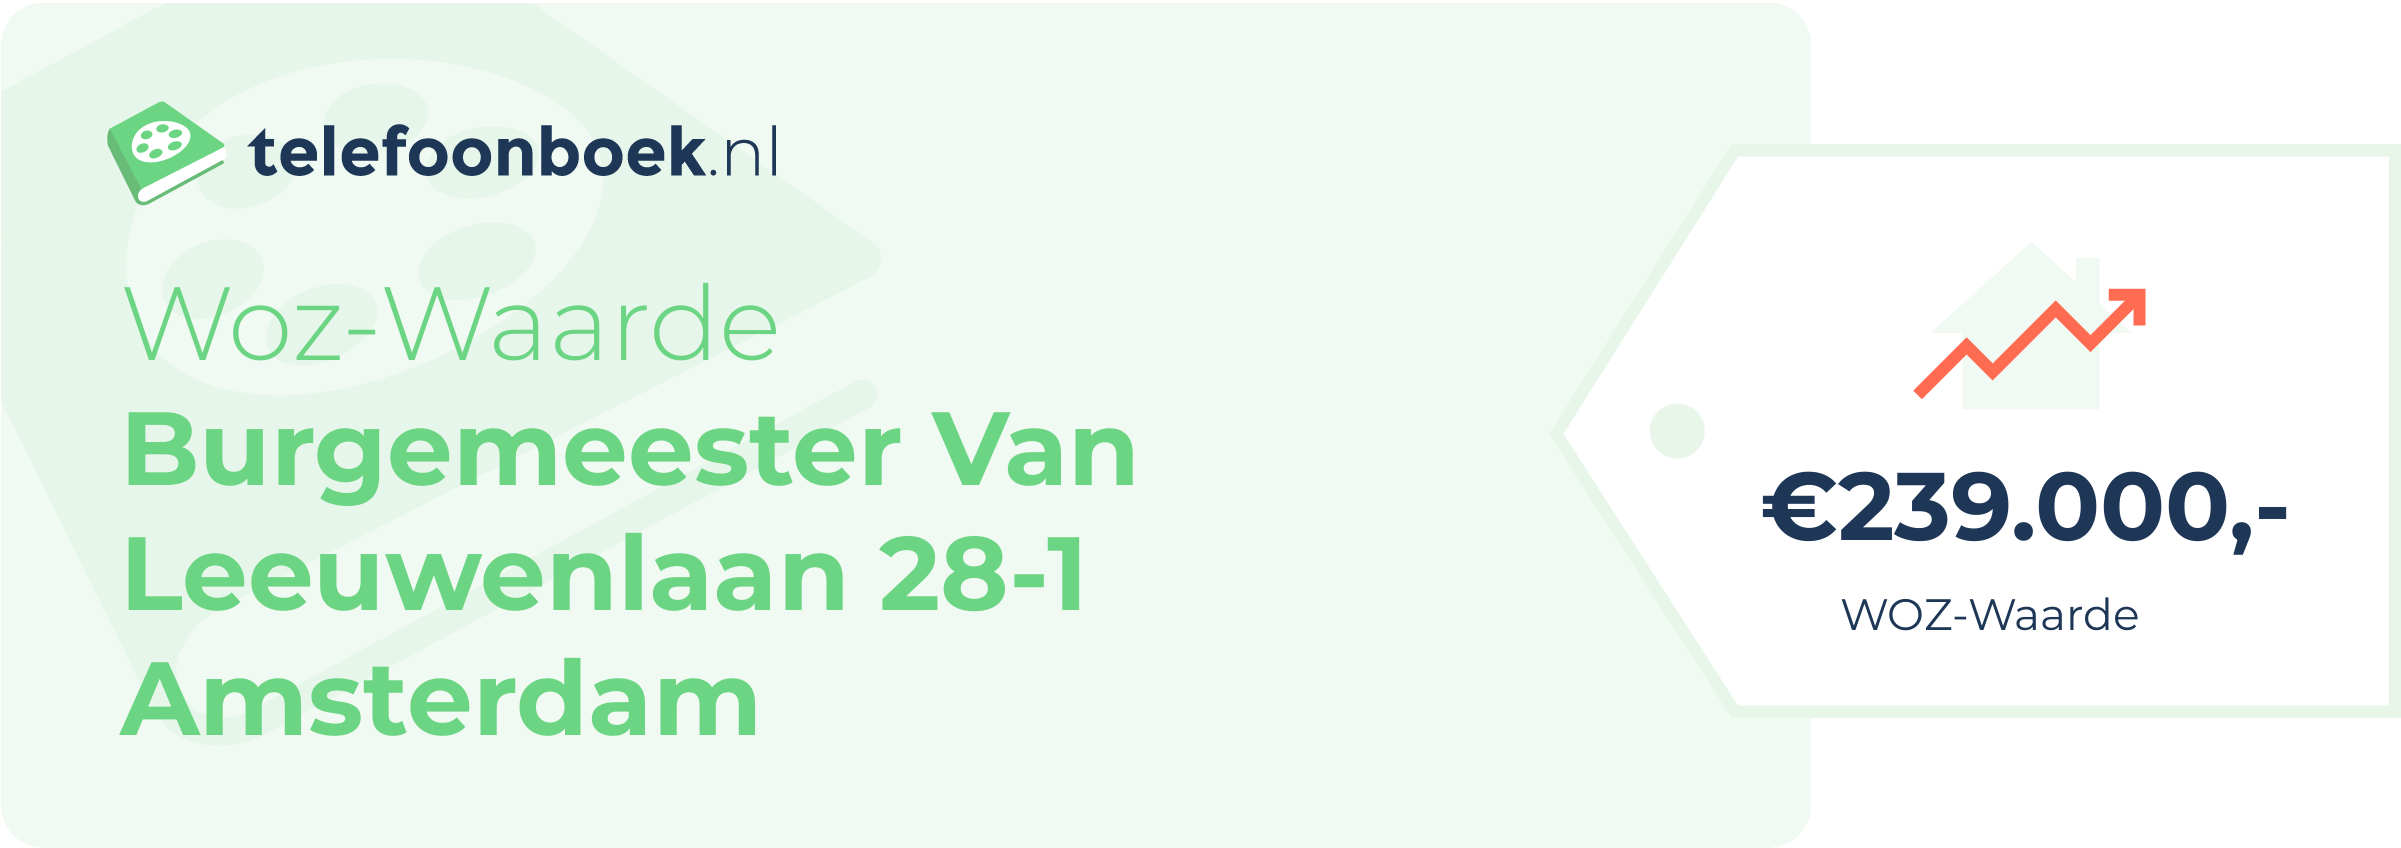 WOZ-waarde Burgemeester Van Leeuwenlaan 28-1 Amsterdam